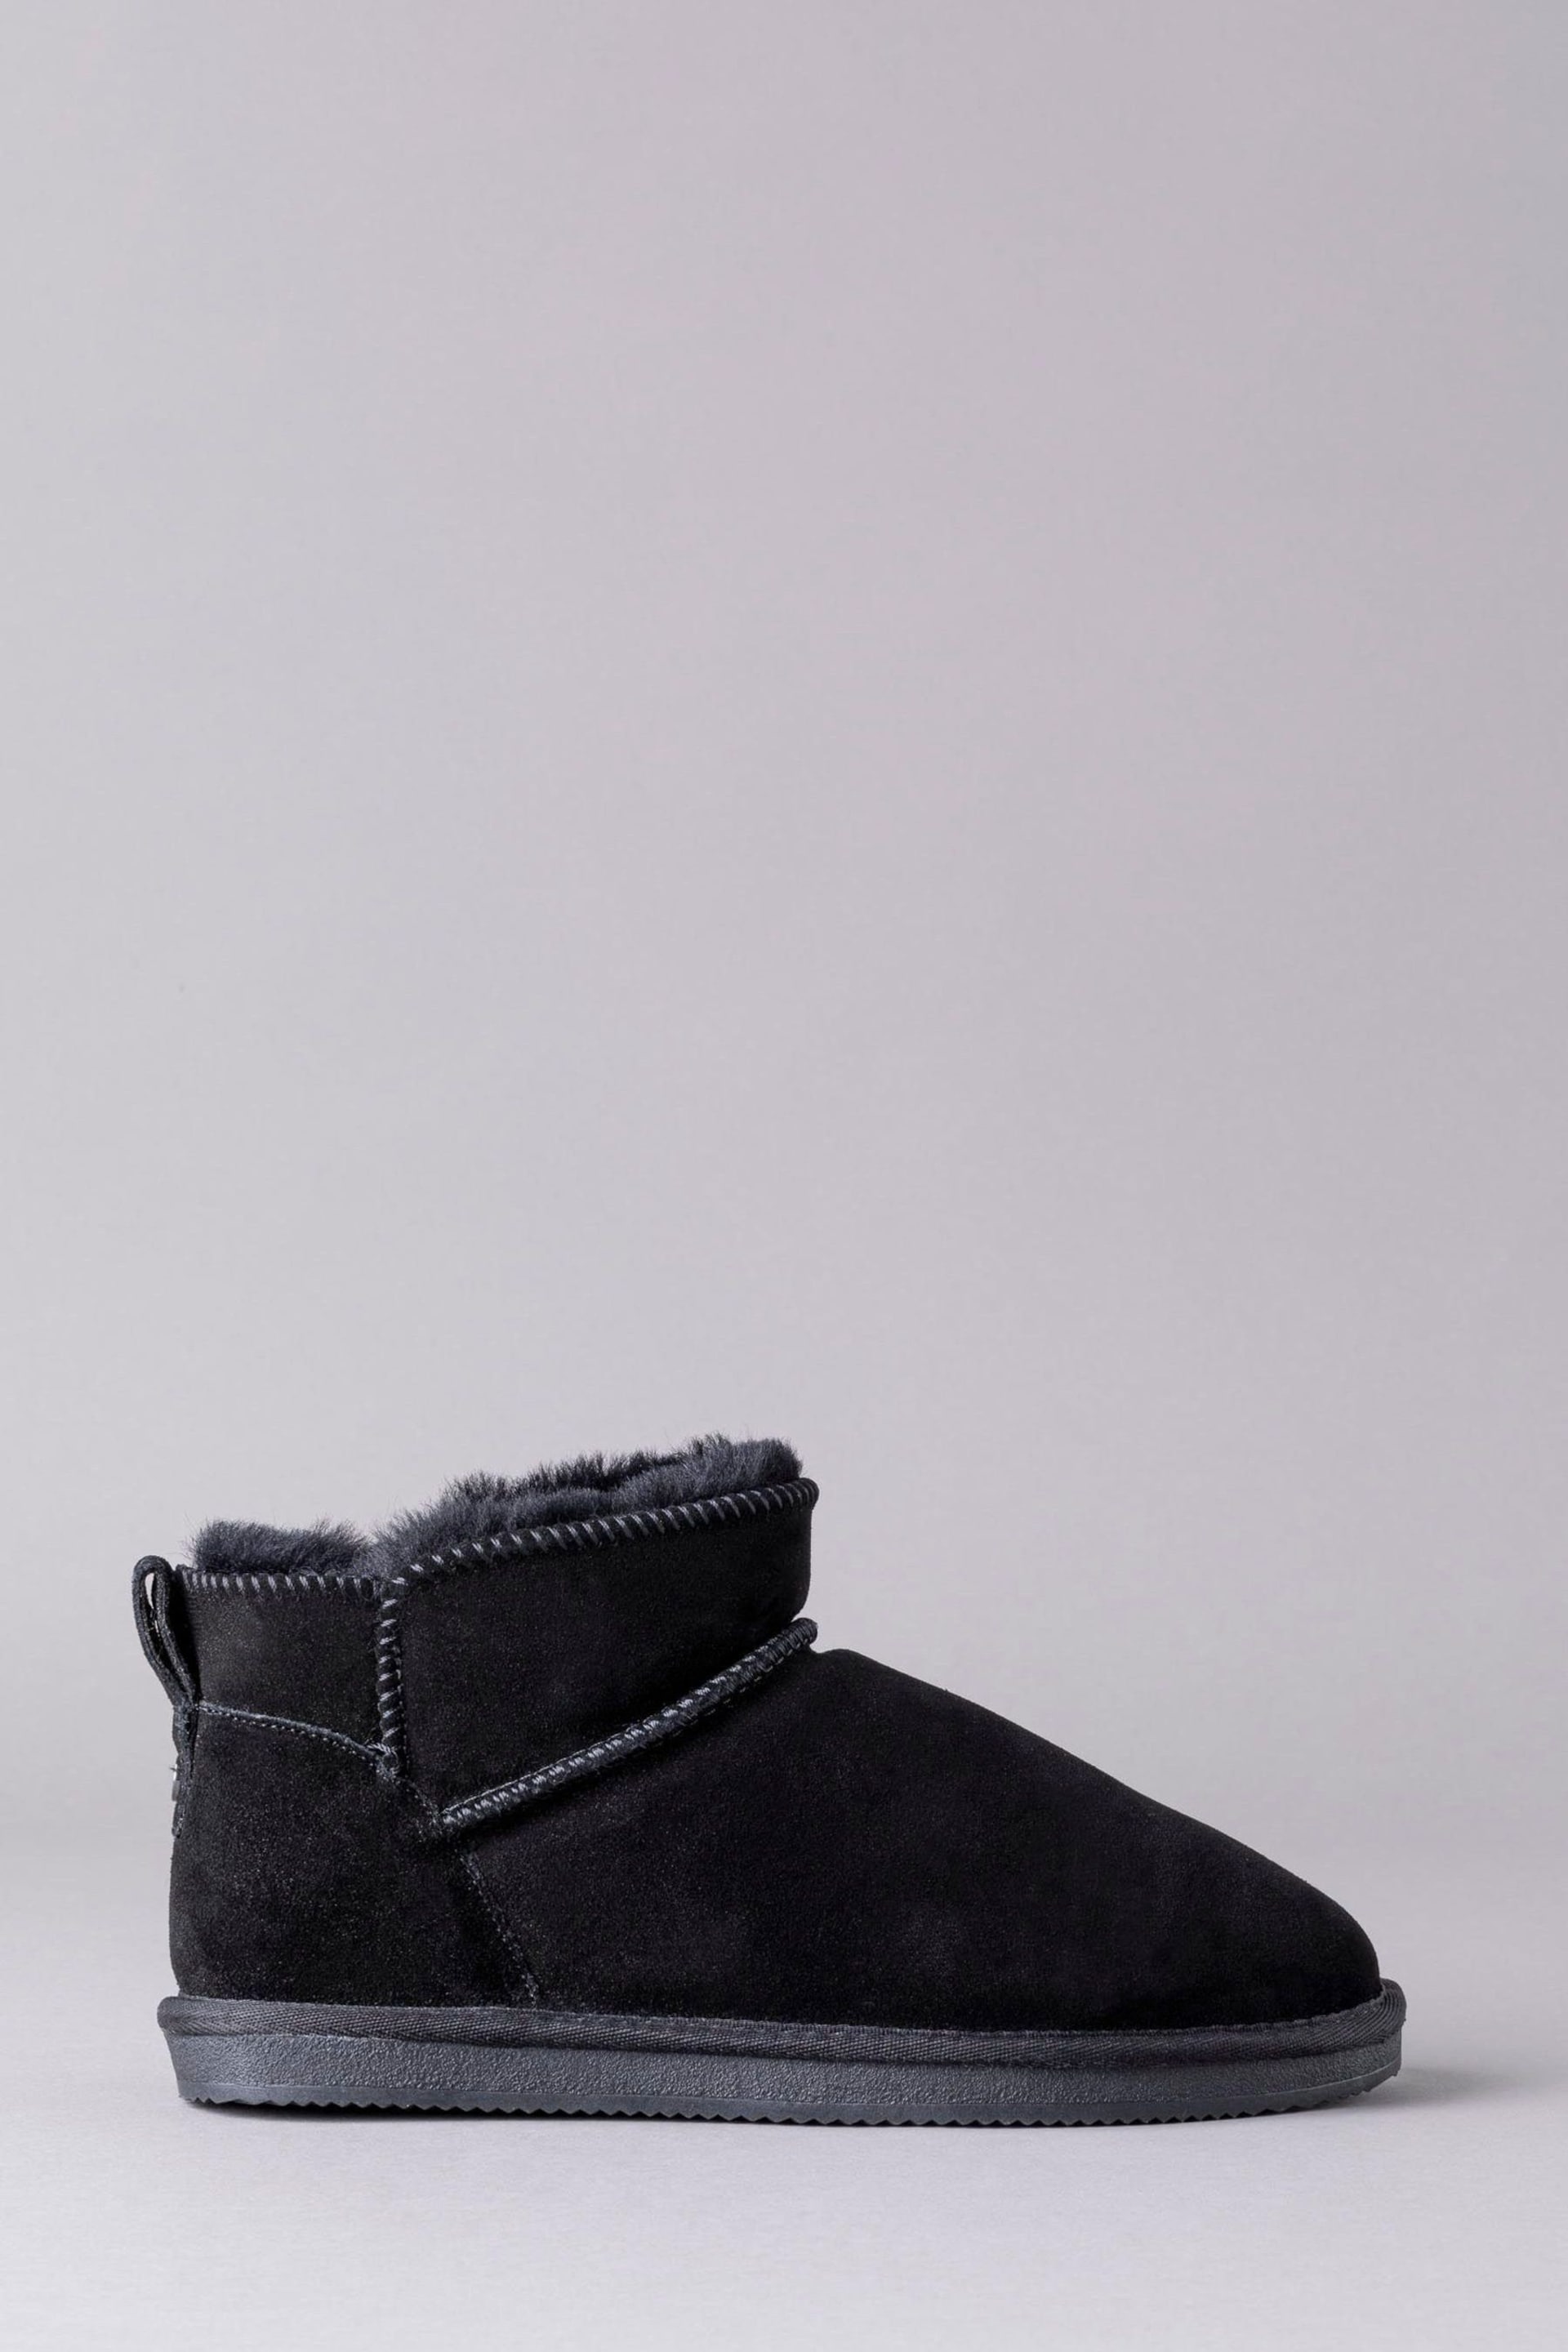 Lakeland Leather Black Ladies Sheepskin Mini Boot Slippers - Image 1 of 5